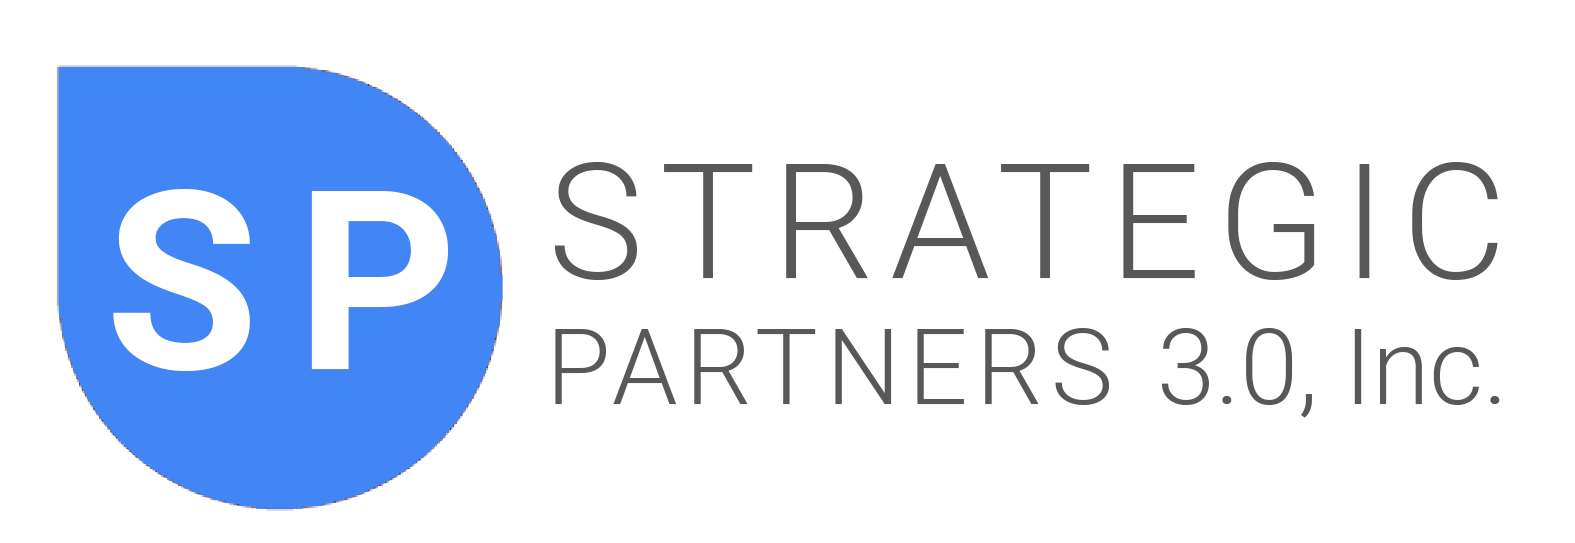 Strategic Partners 3.0